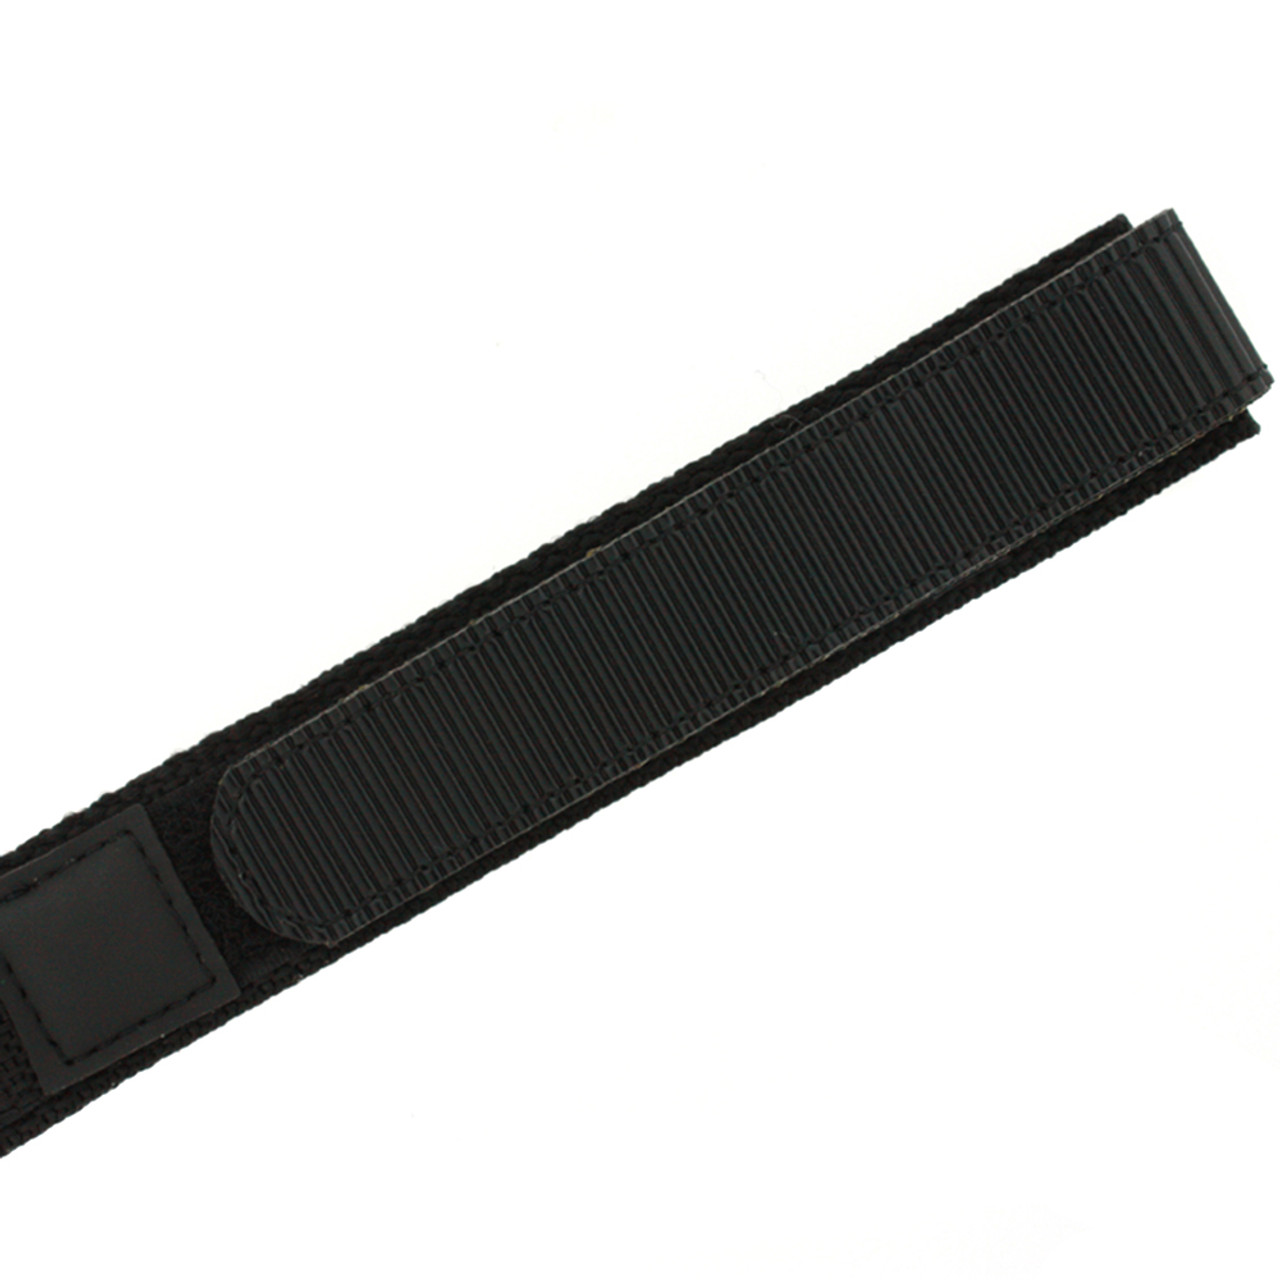 Velcro Black Watch Strap